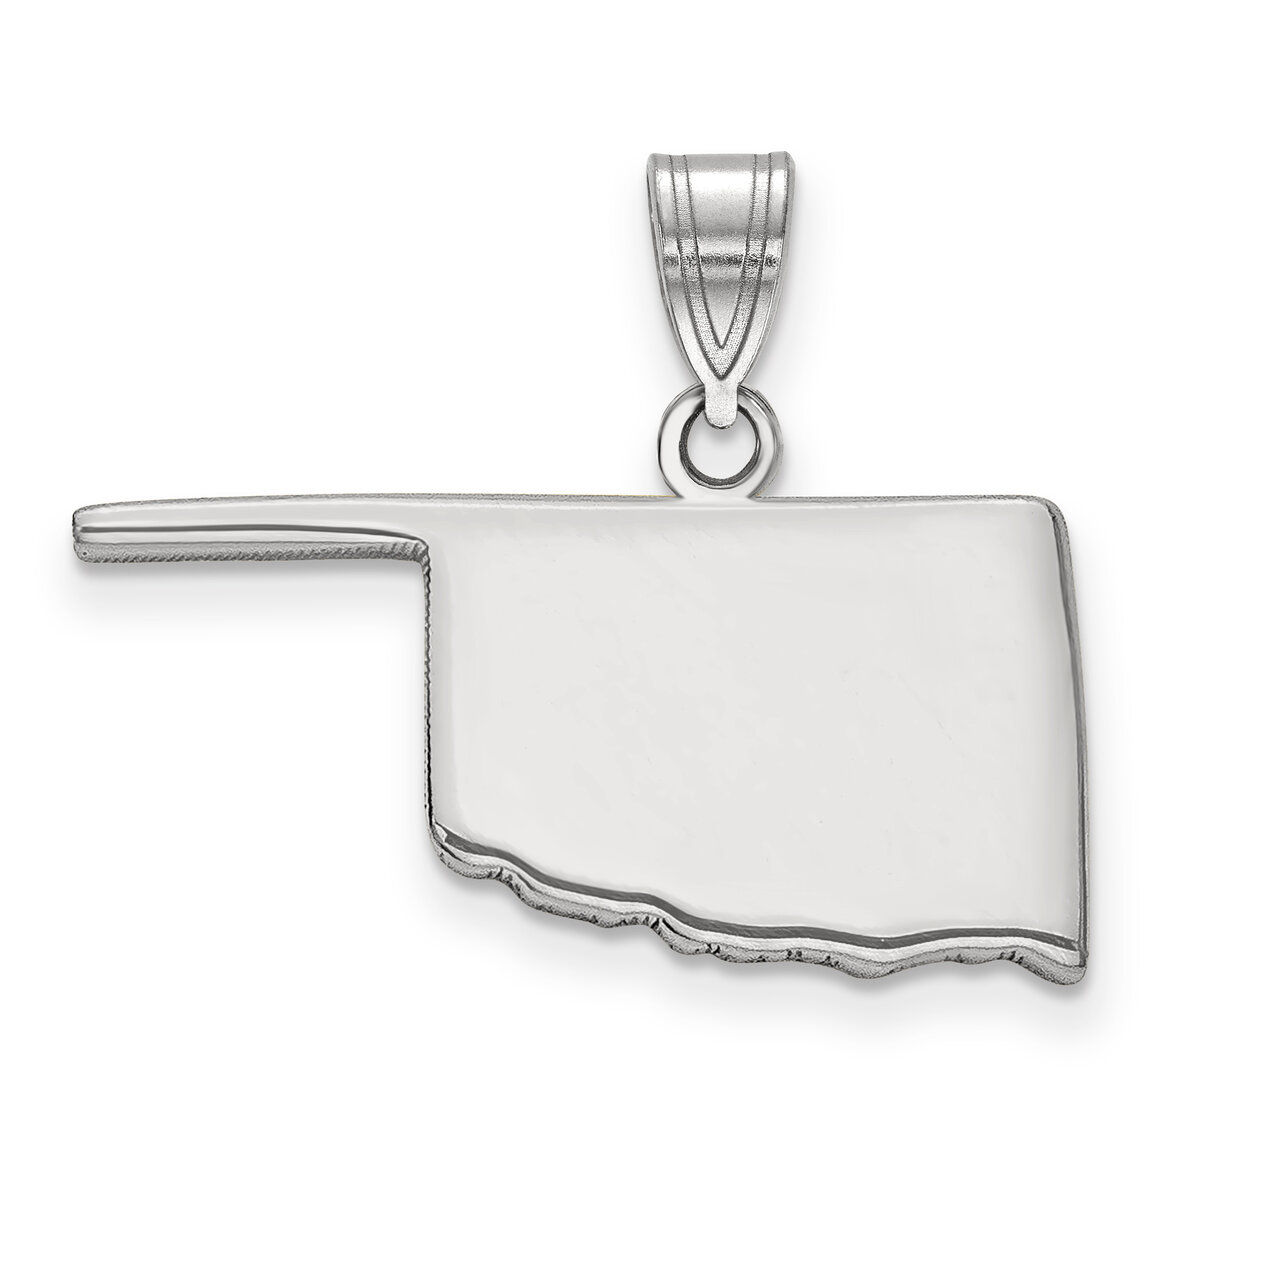 Oklahoma State Pendant Charm Sterling Silver Engravable XNA707SS-OK